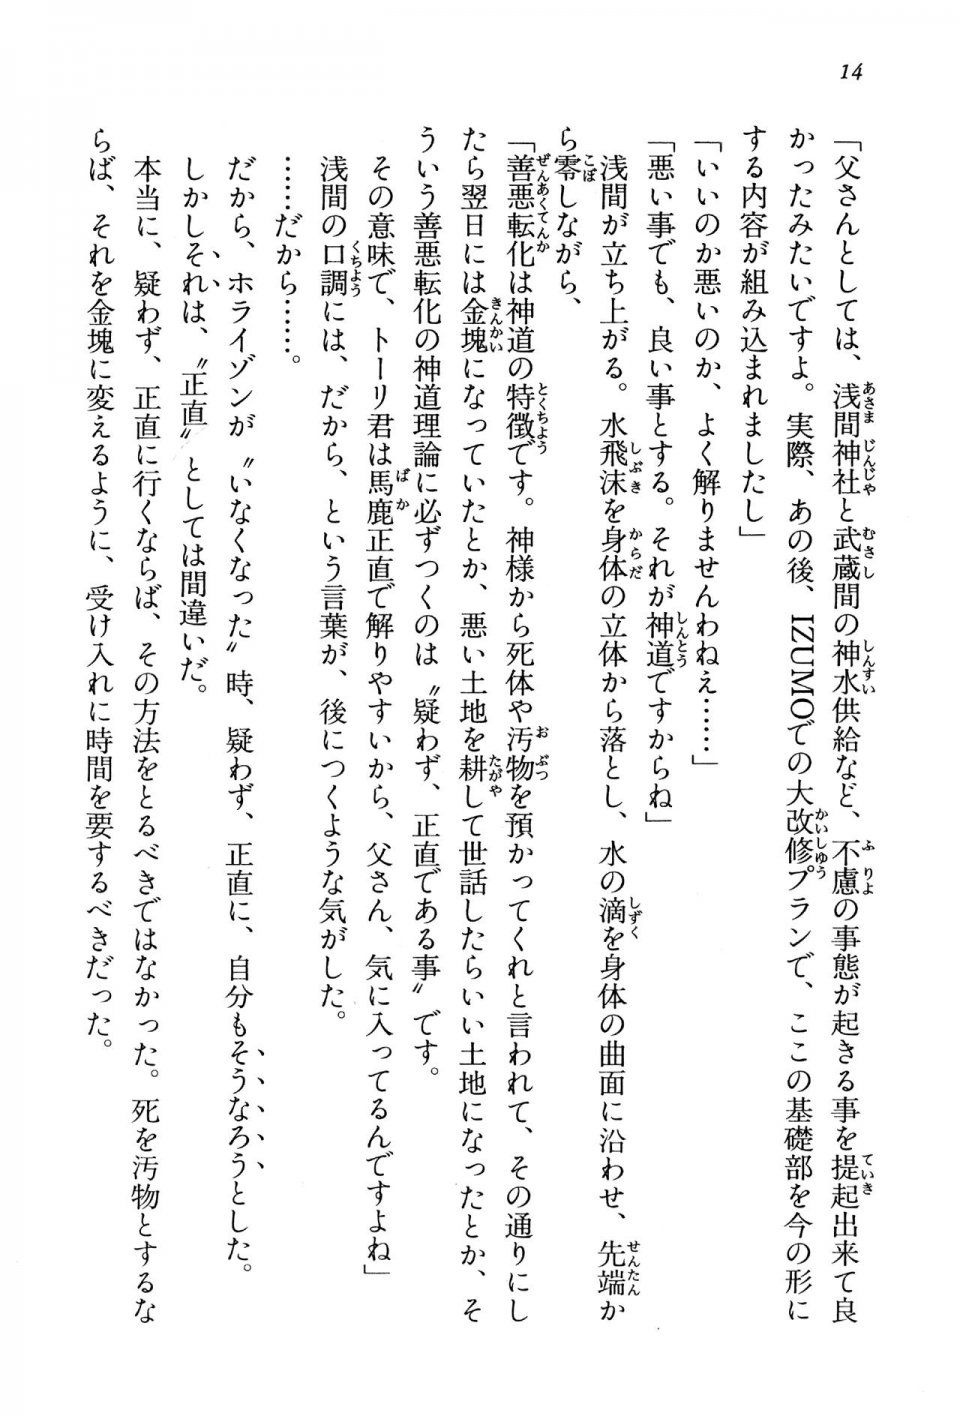 Kyoukai Senjou no Horizon BD Special Mininovel Vol 5(3A) - Photo #18